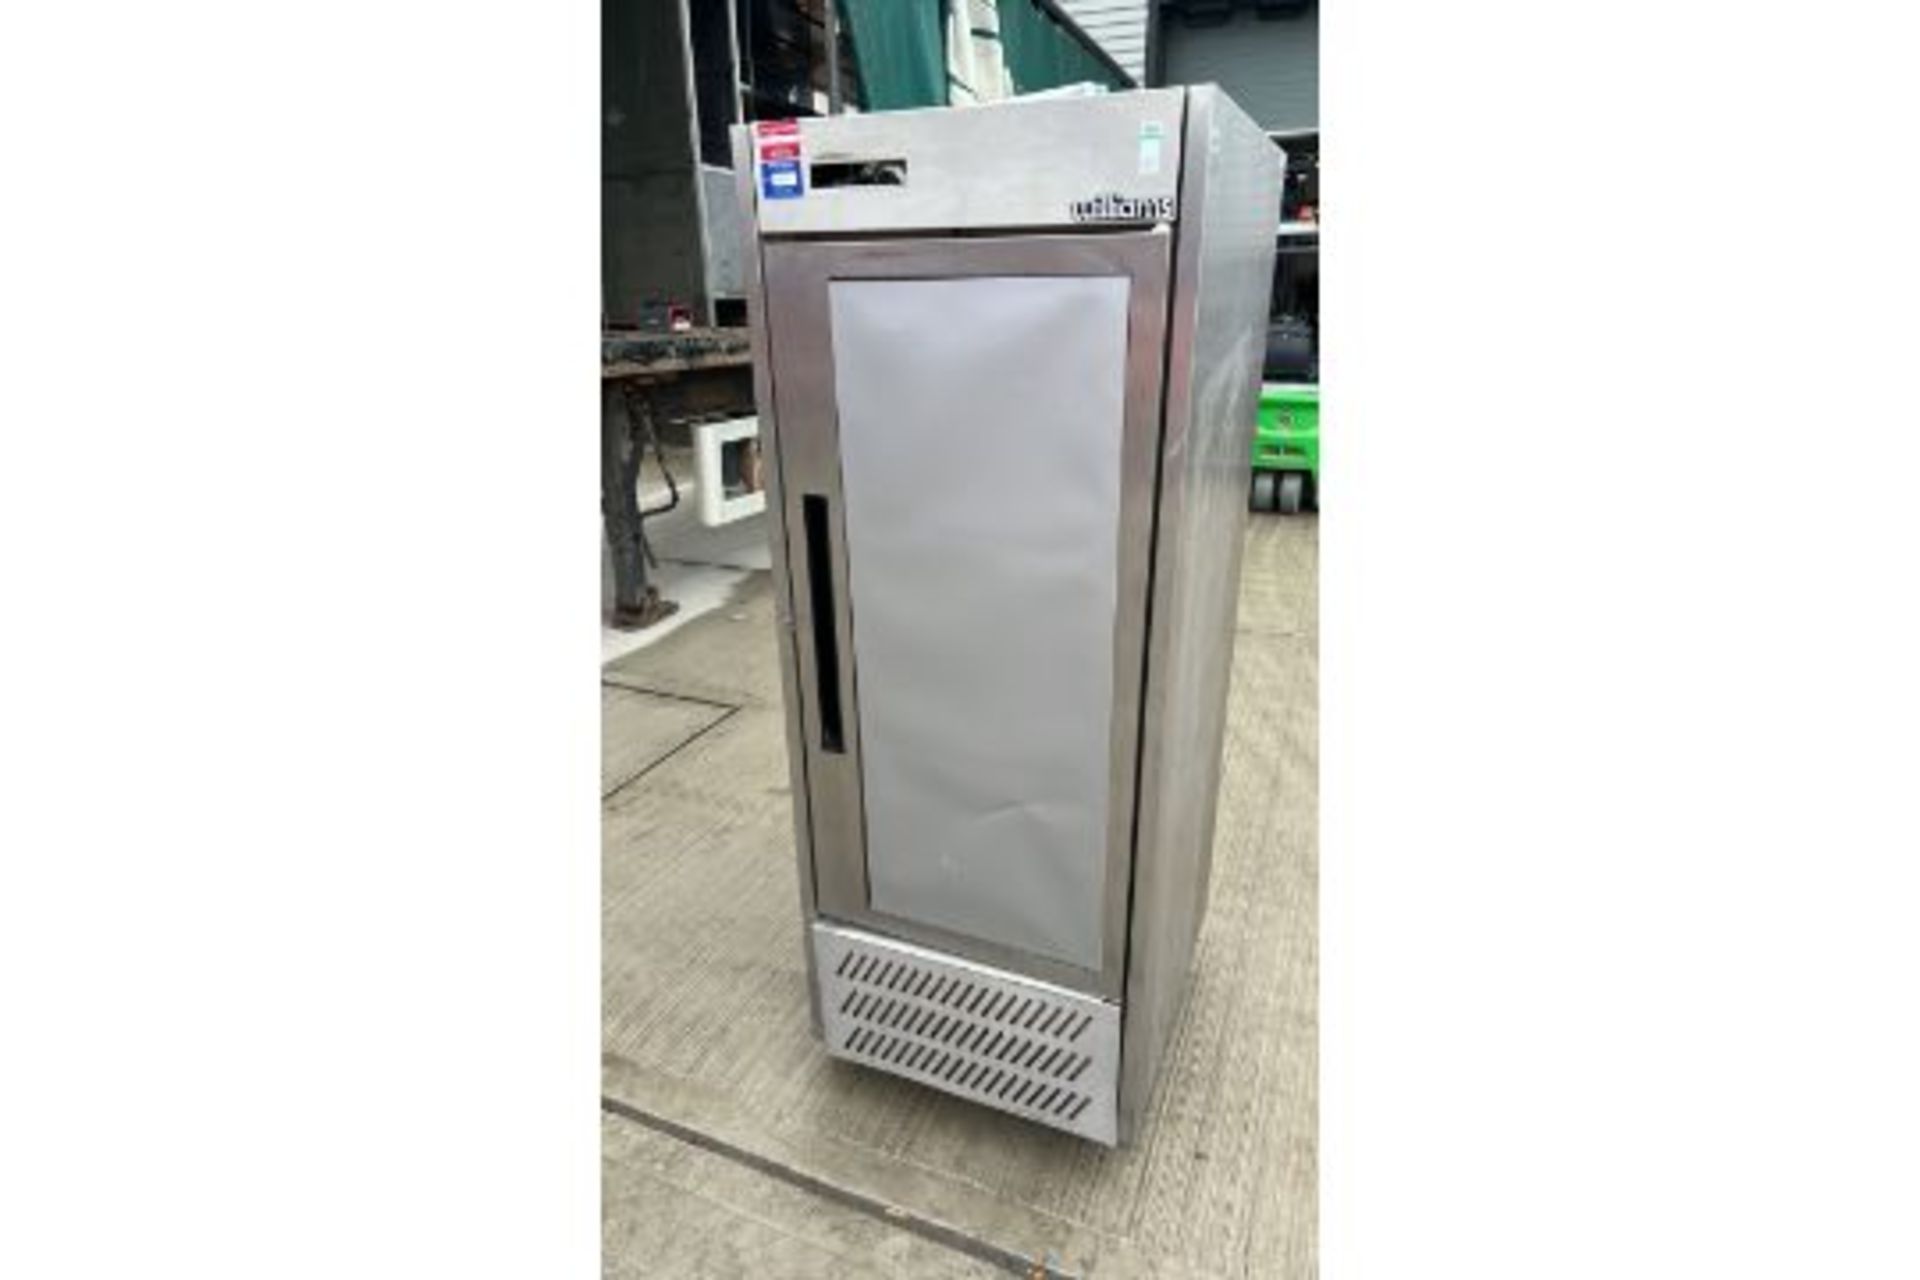 Williams Refrigerator